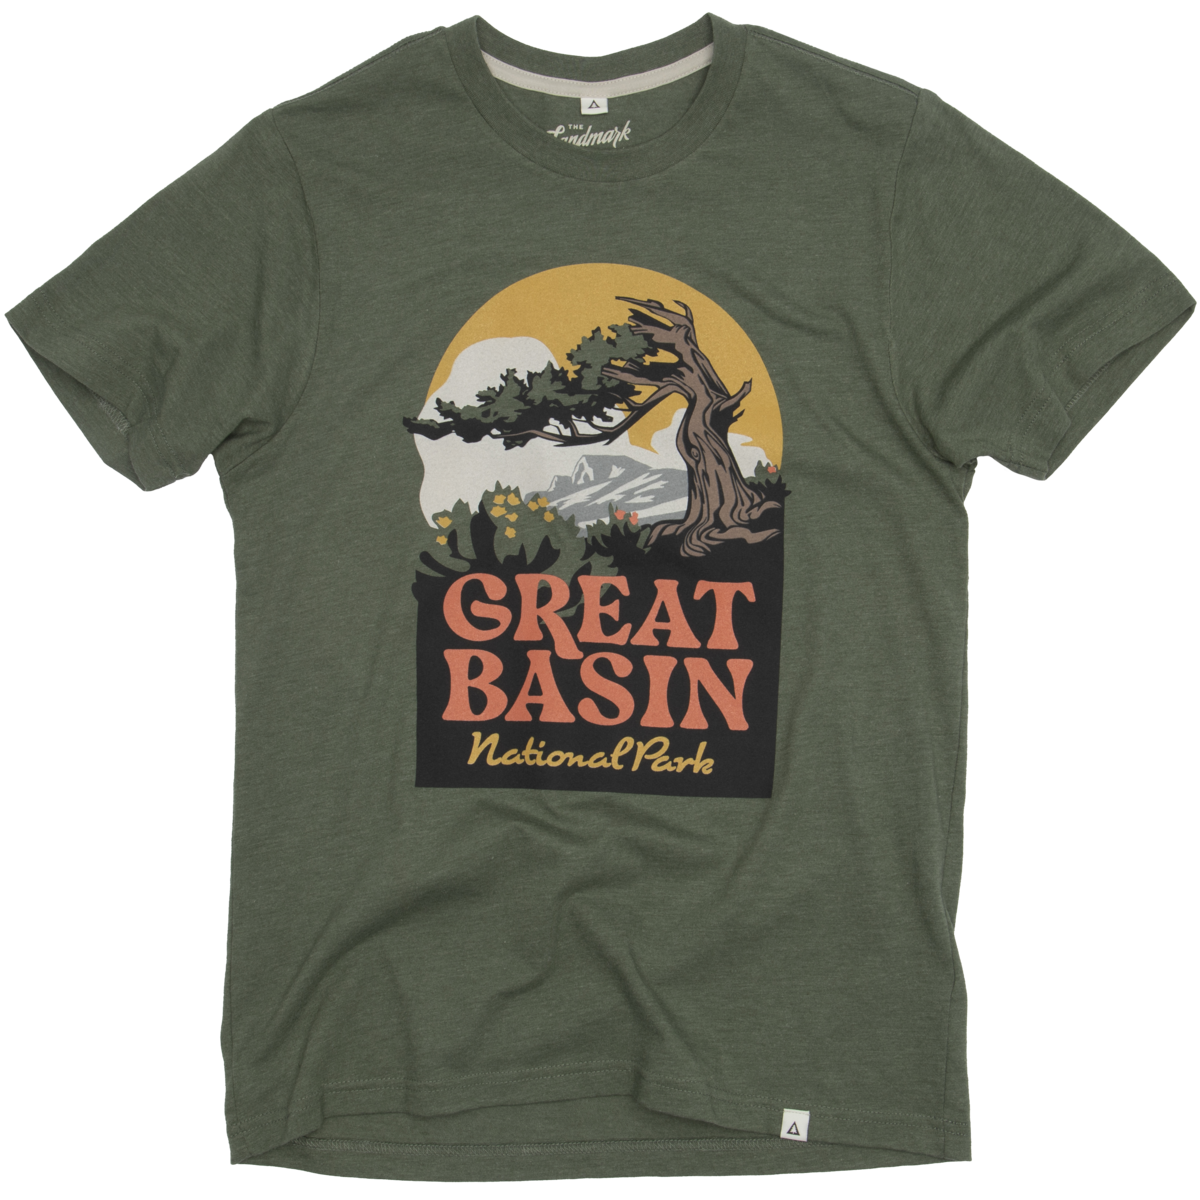 Great Basin National Park Tee